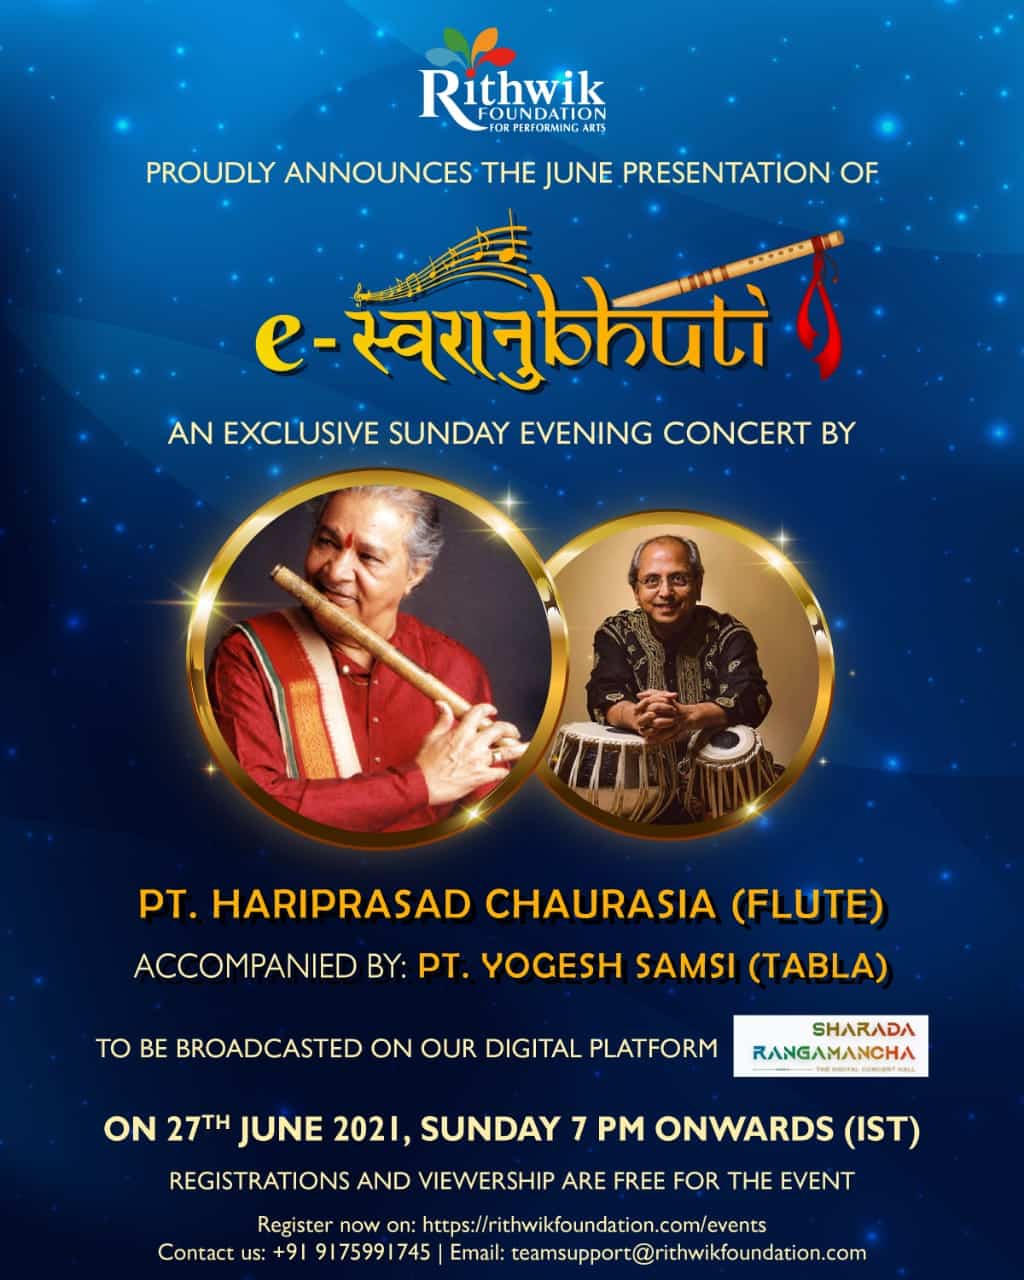 e-Swaranubhuti June 2021 - Online Flute Performance By Pt. Hariprasad Chaurasia